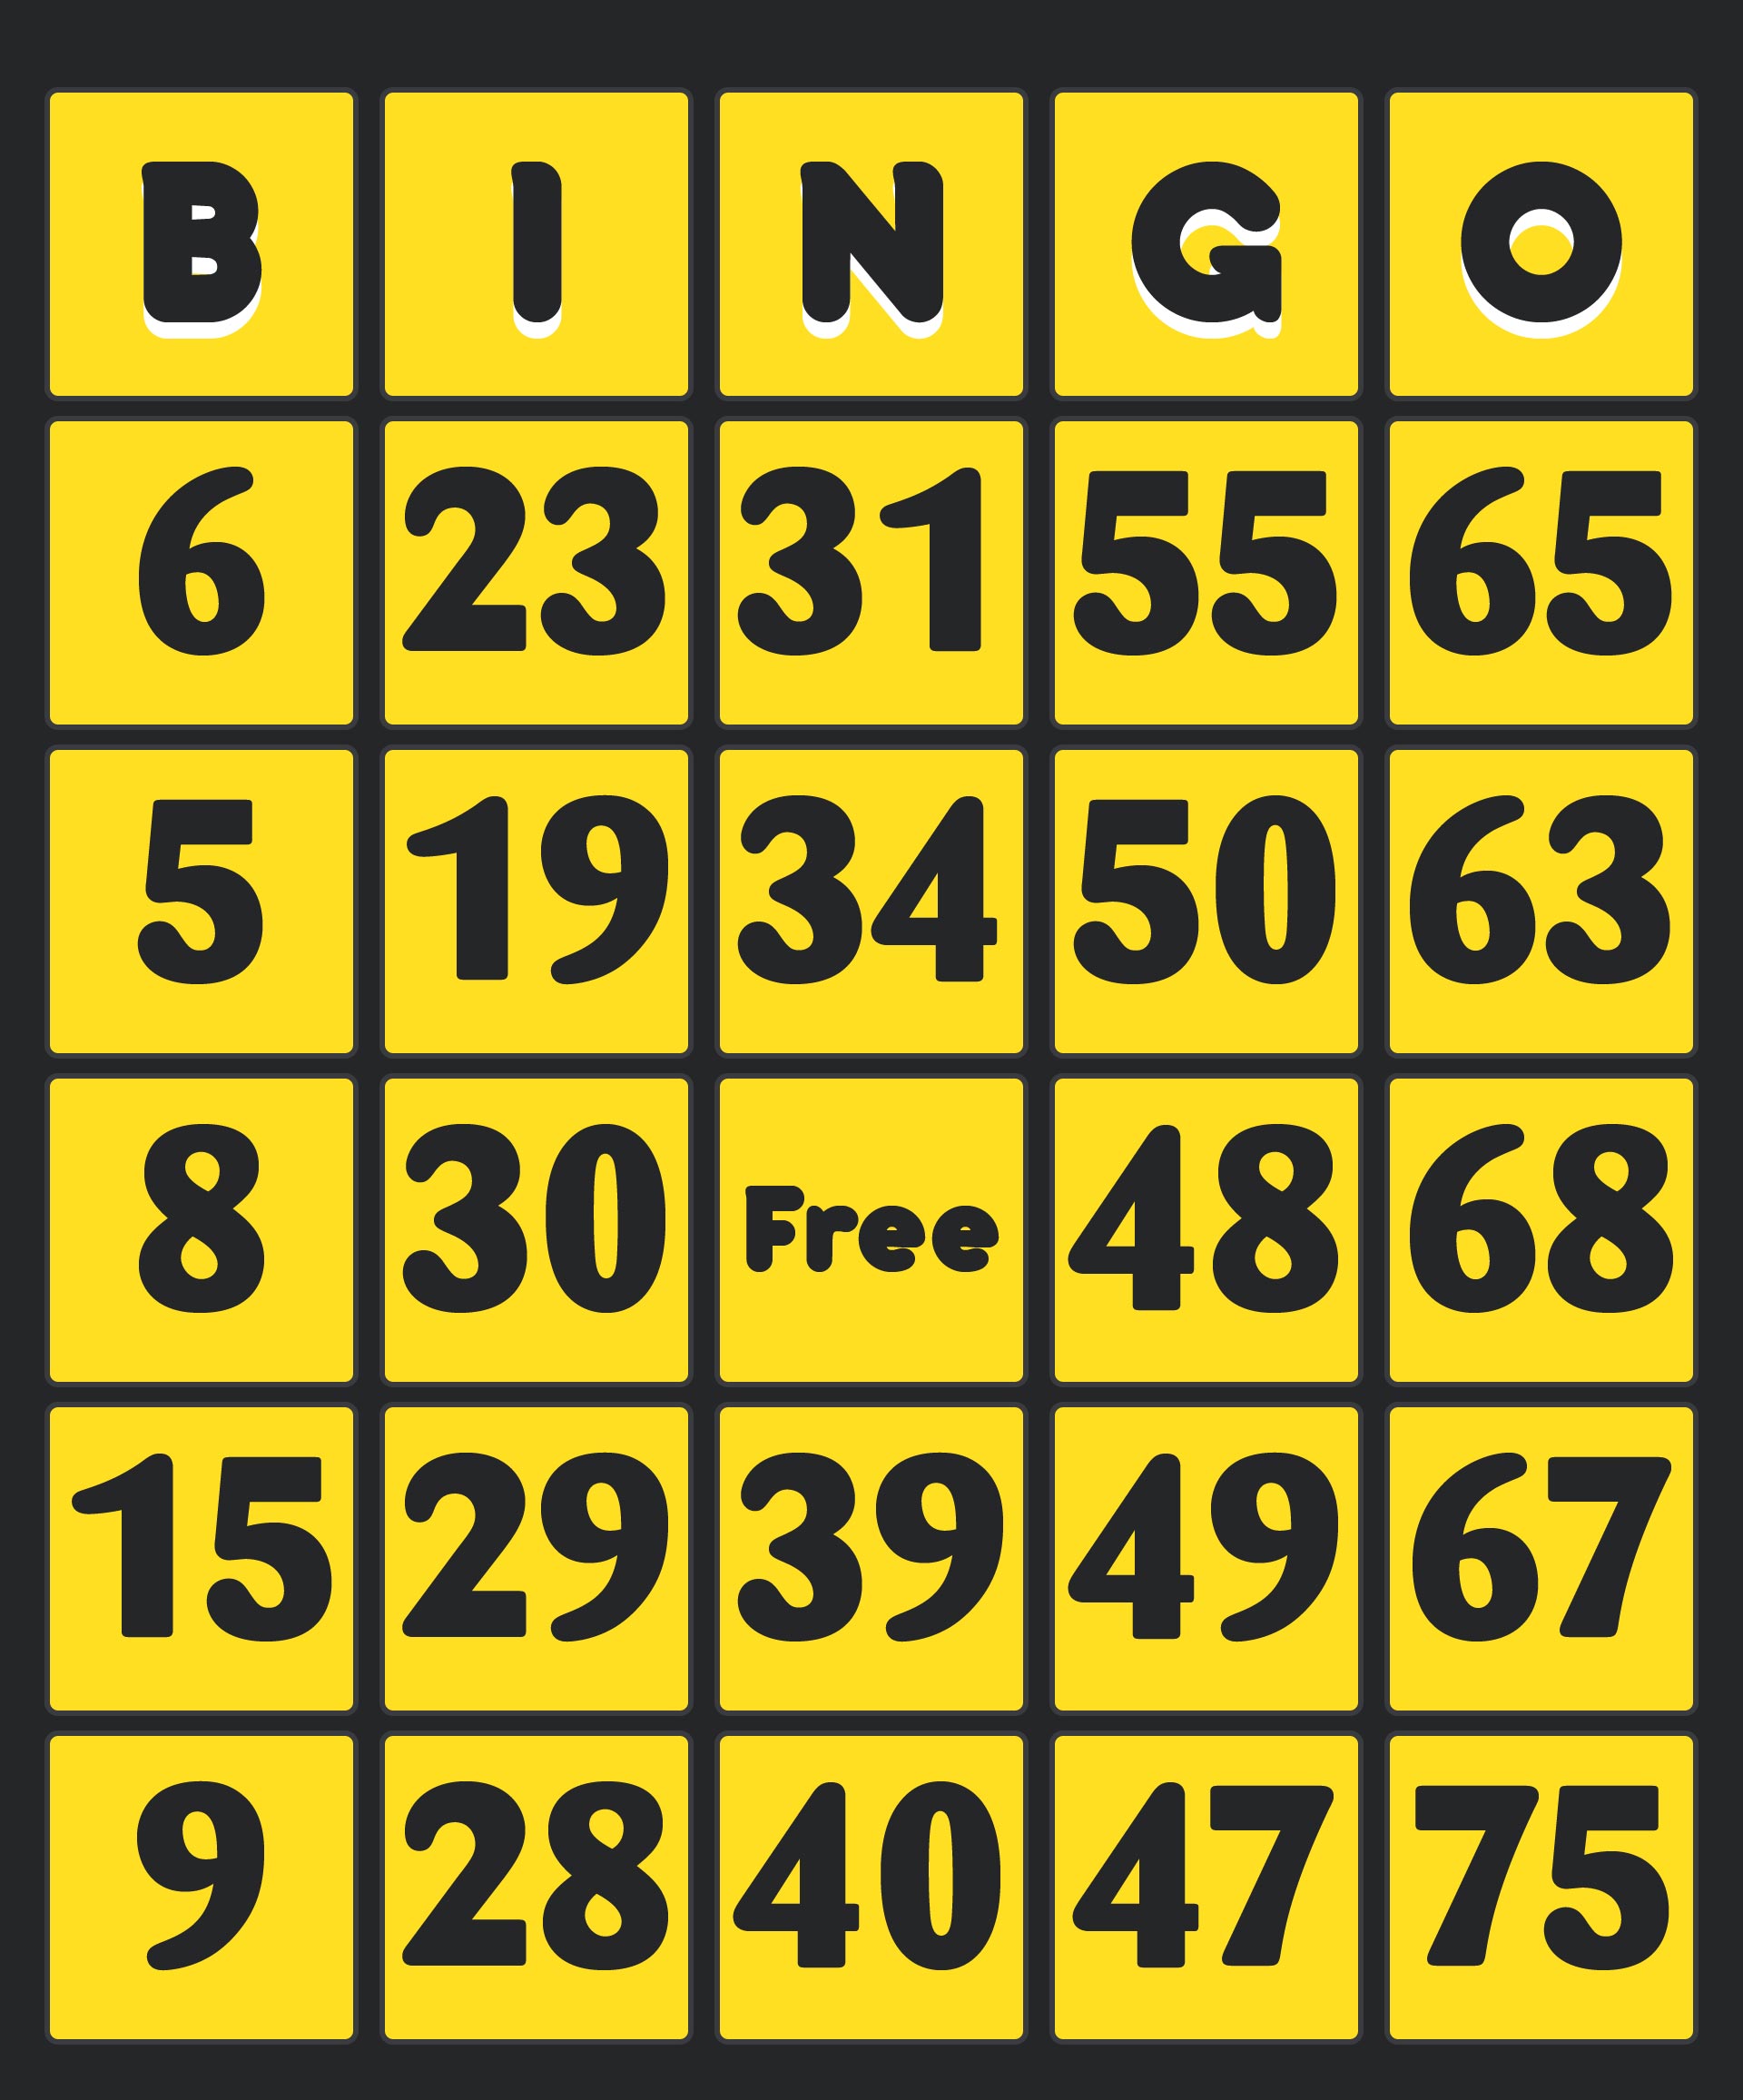 bingo-caller-card-printable-unaremarketing